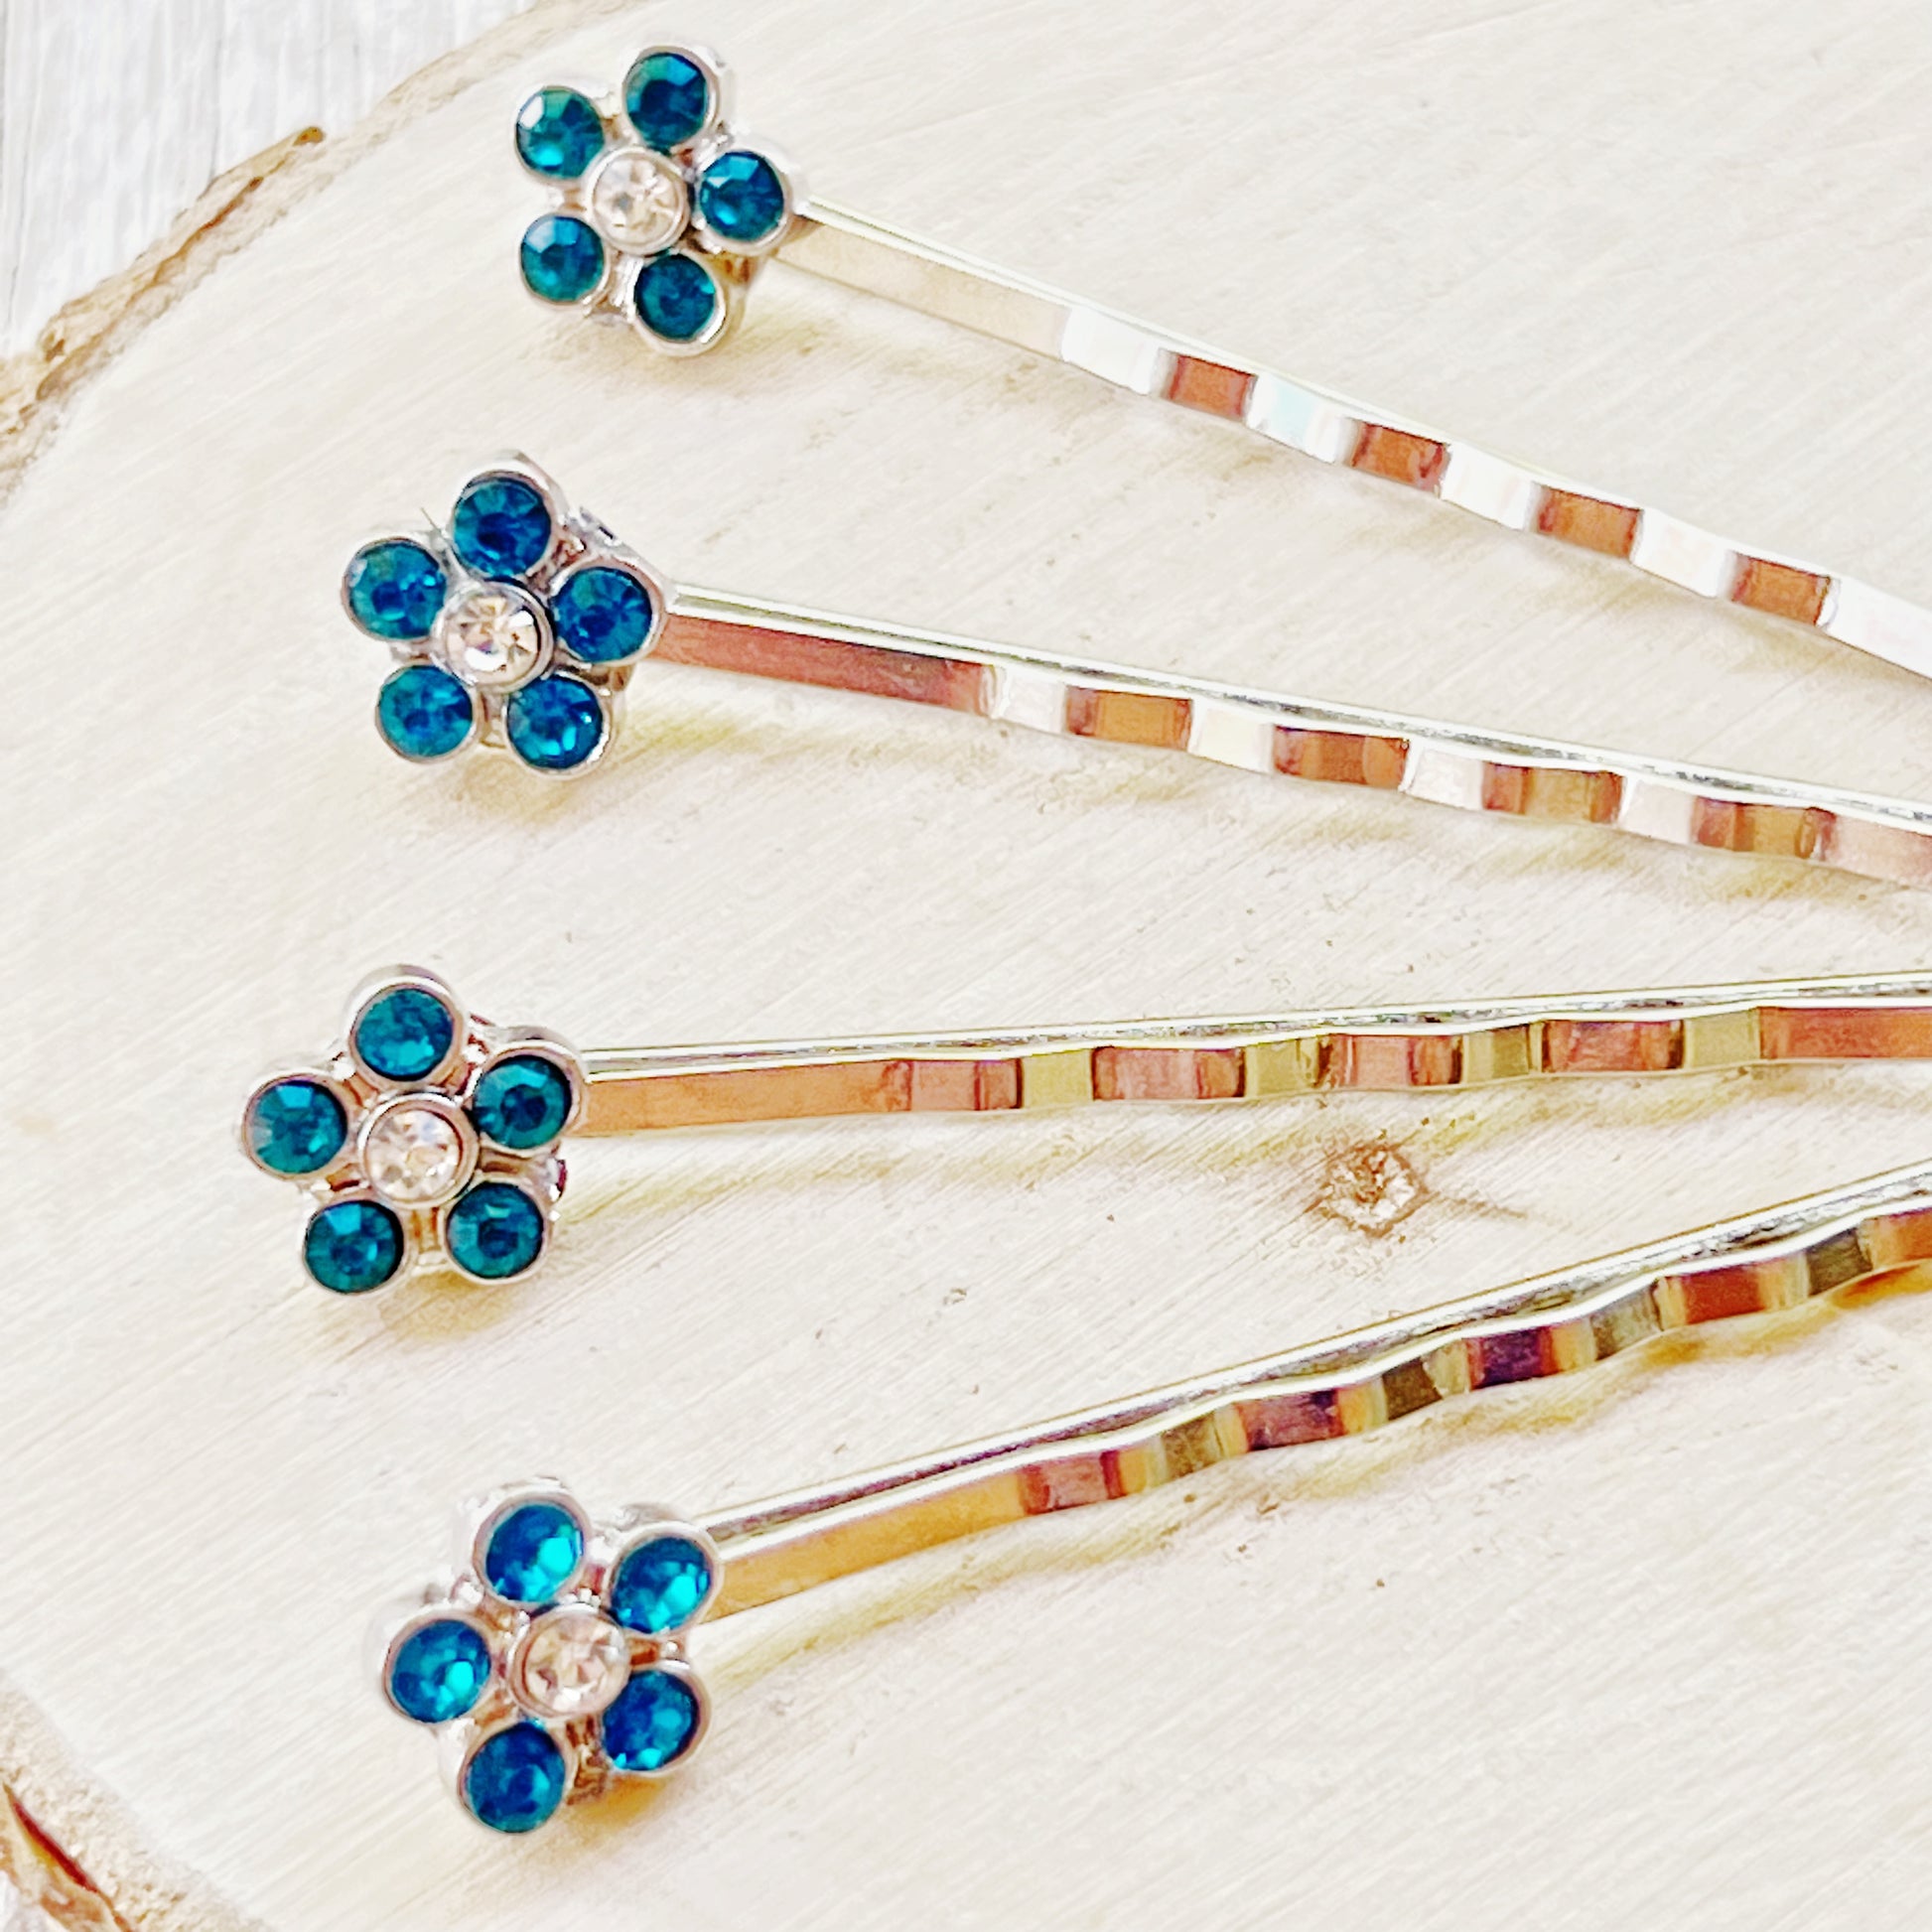 Blue Rhinestone Flower Hair Pins - Elegant and Sparkling Floral Hair Accessories